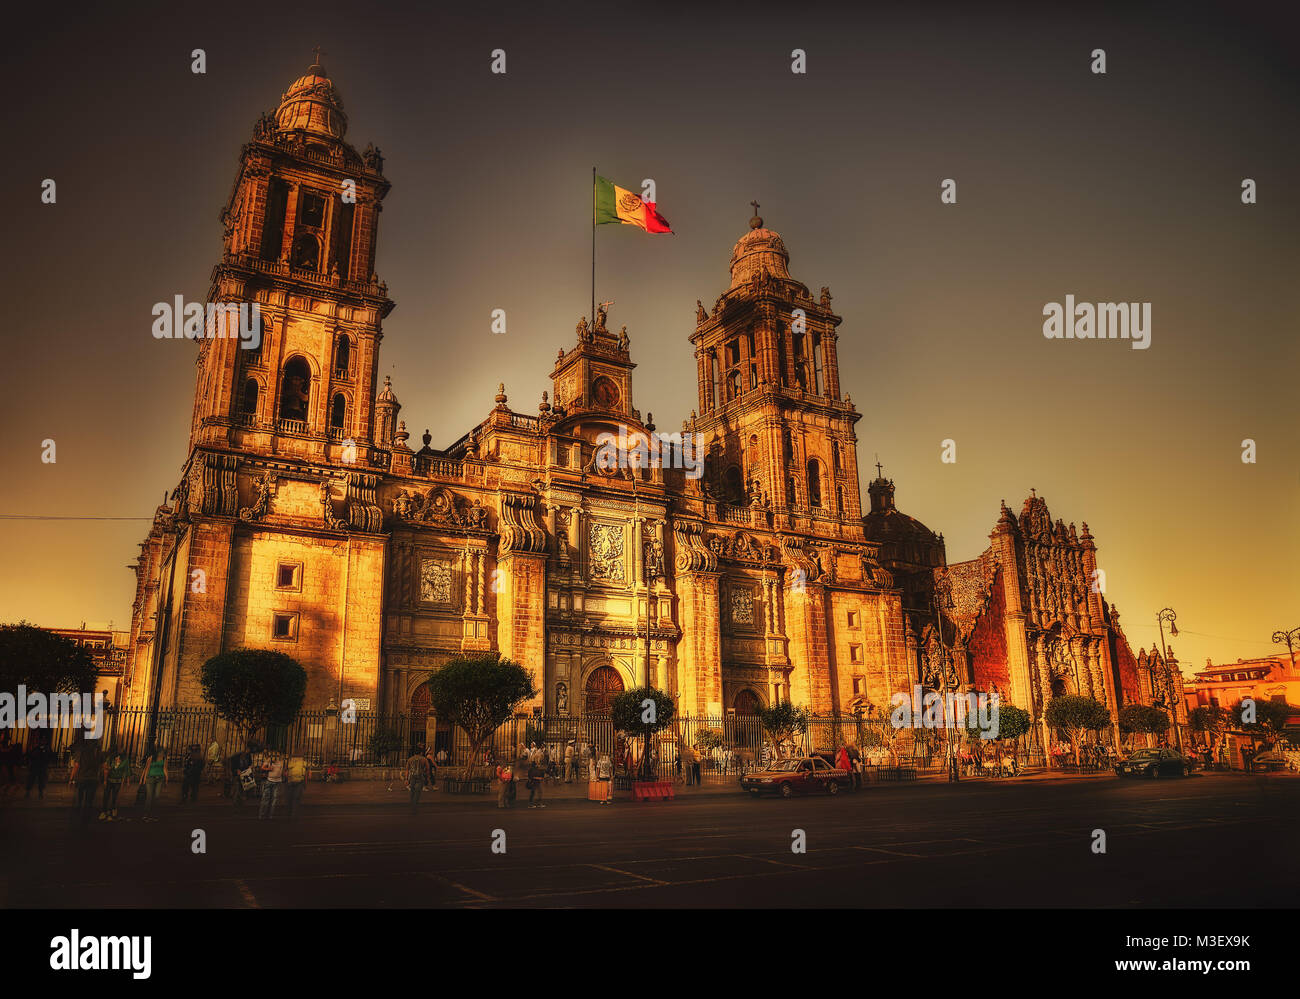 Catedral Metropolitana de la Ciudad de Mexico Mexico City Center taken in 2015 Stock Photo